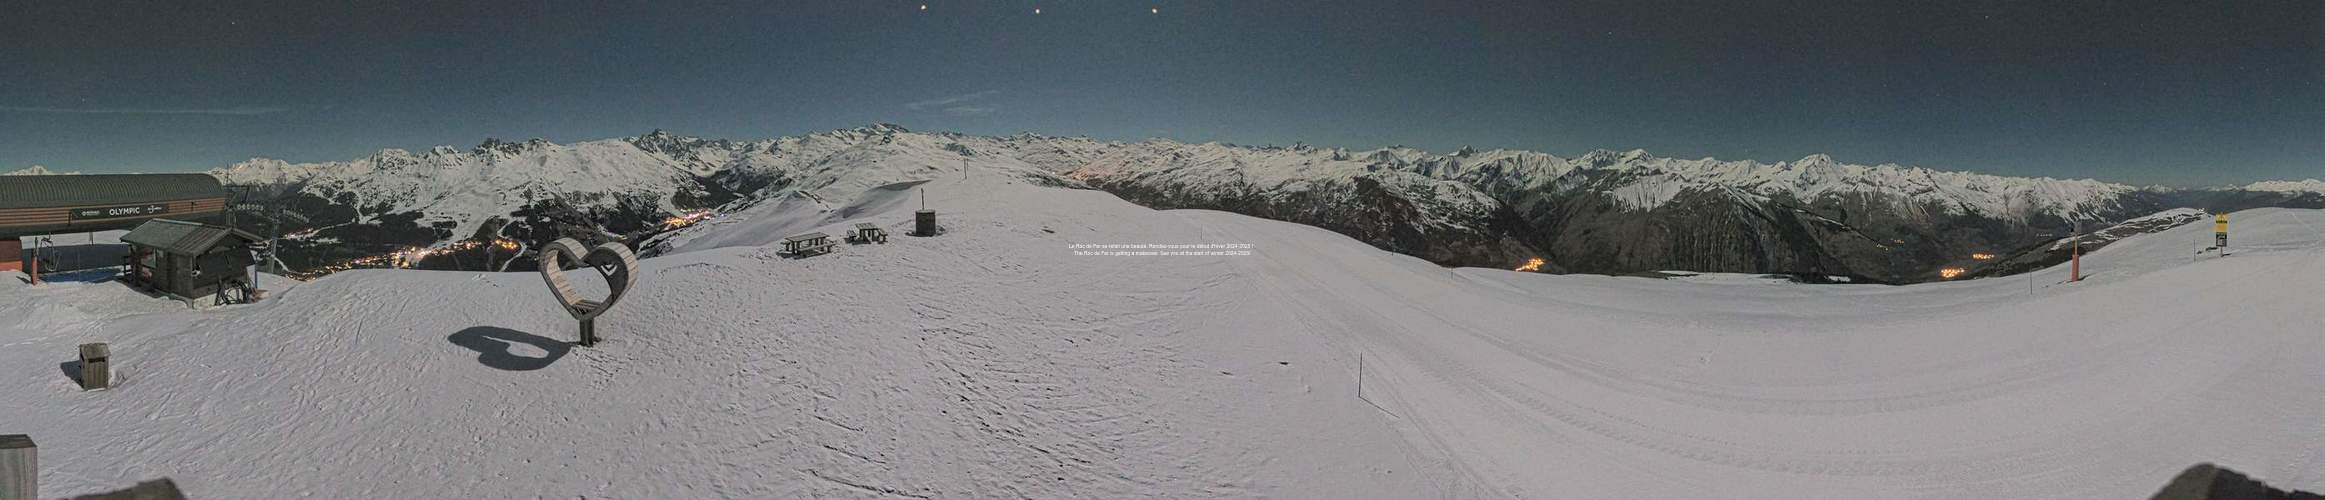 Meribel webcam - Roc de Fer ski station Olympic Express